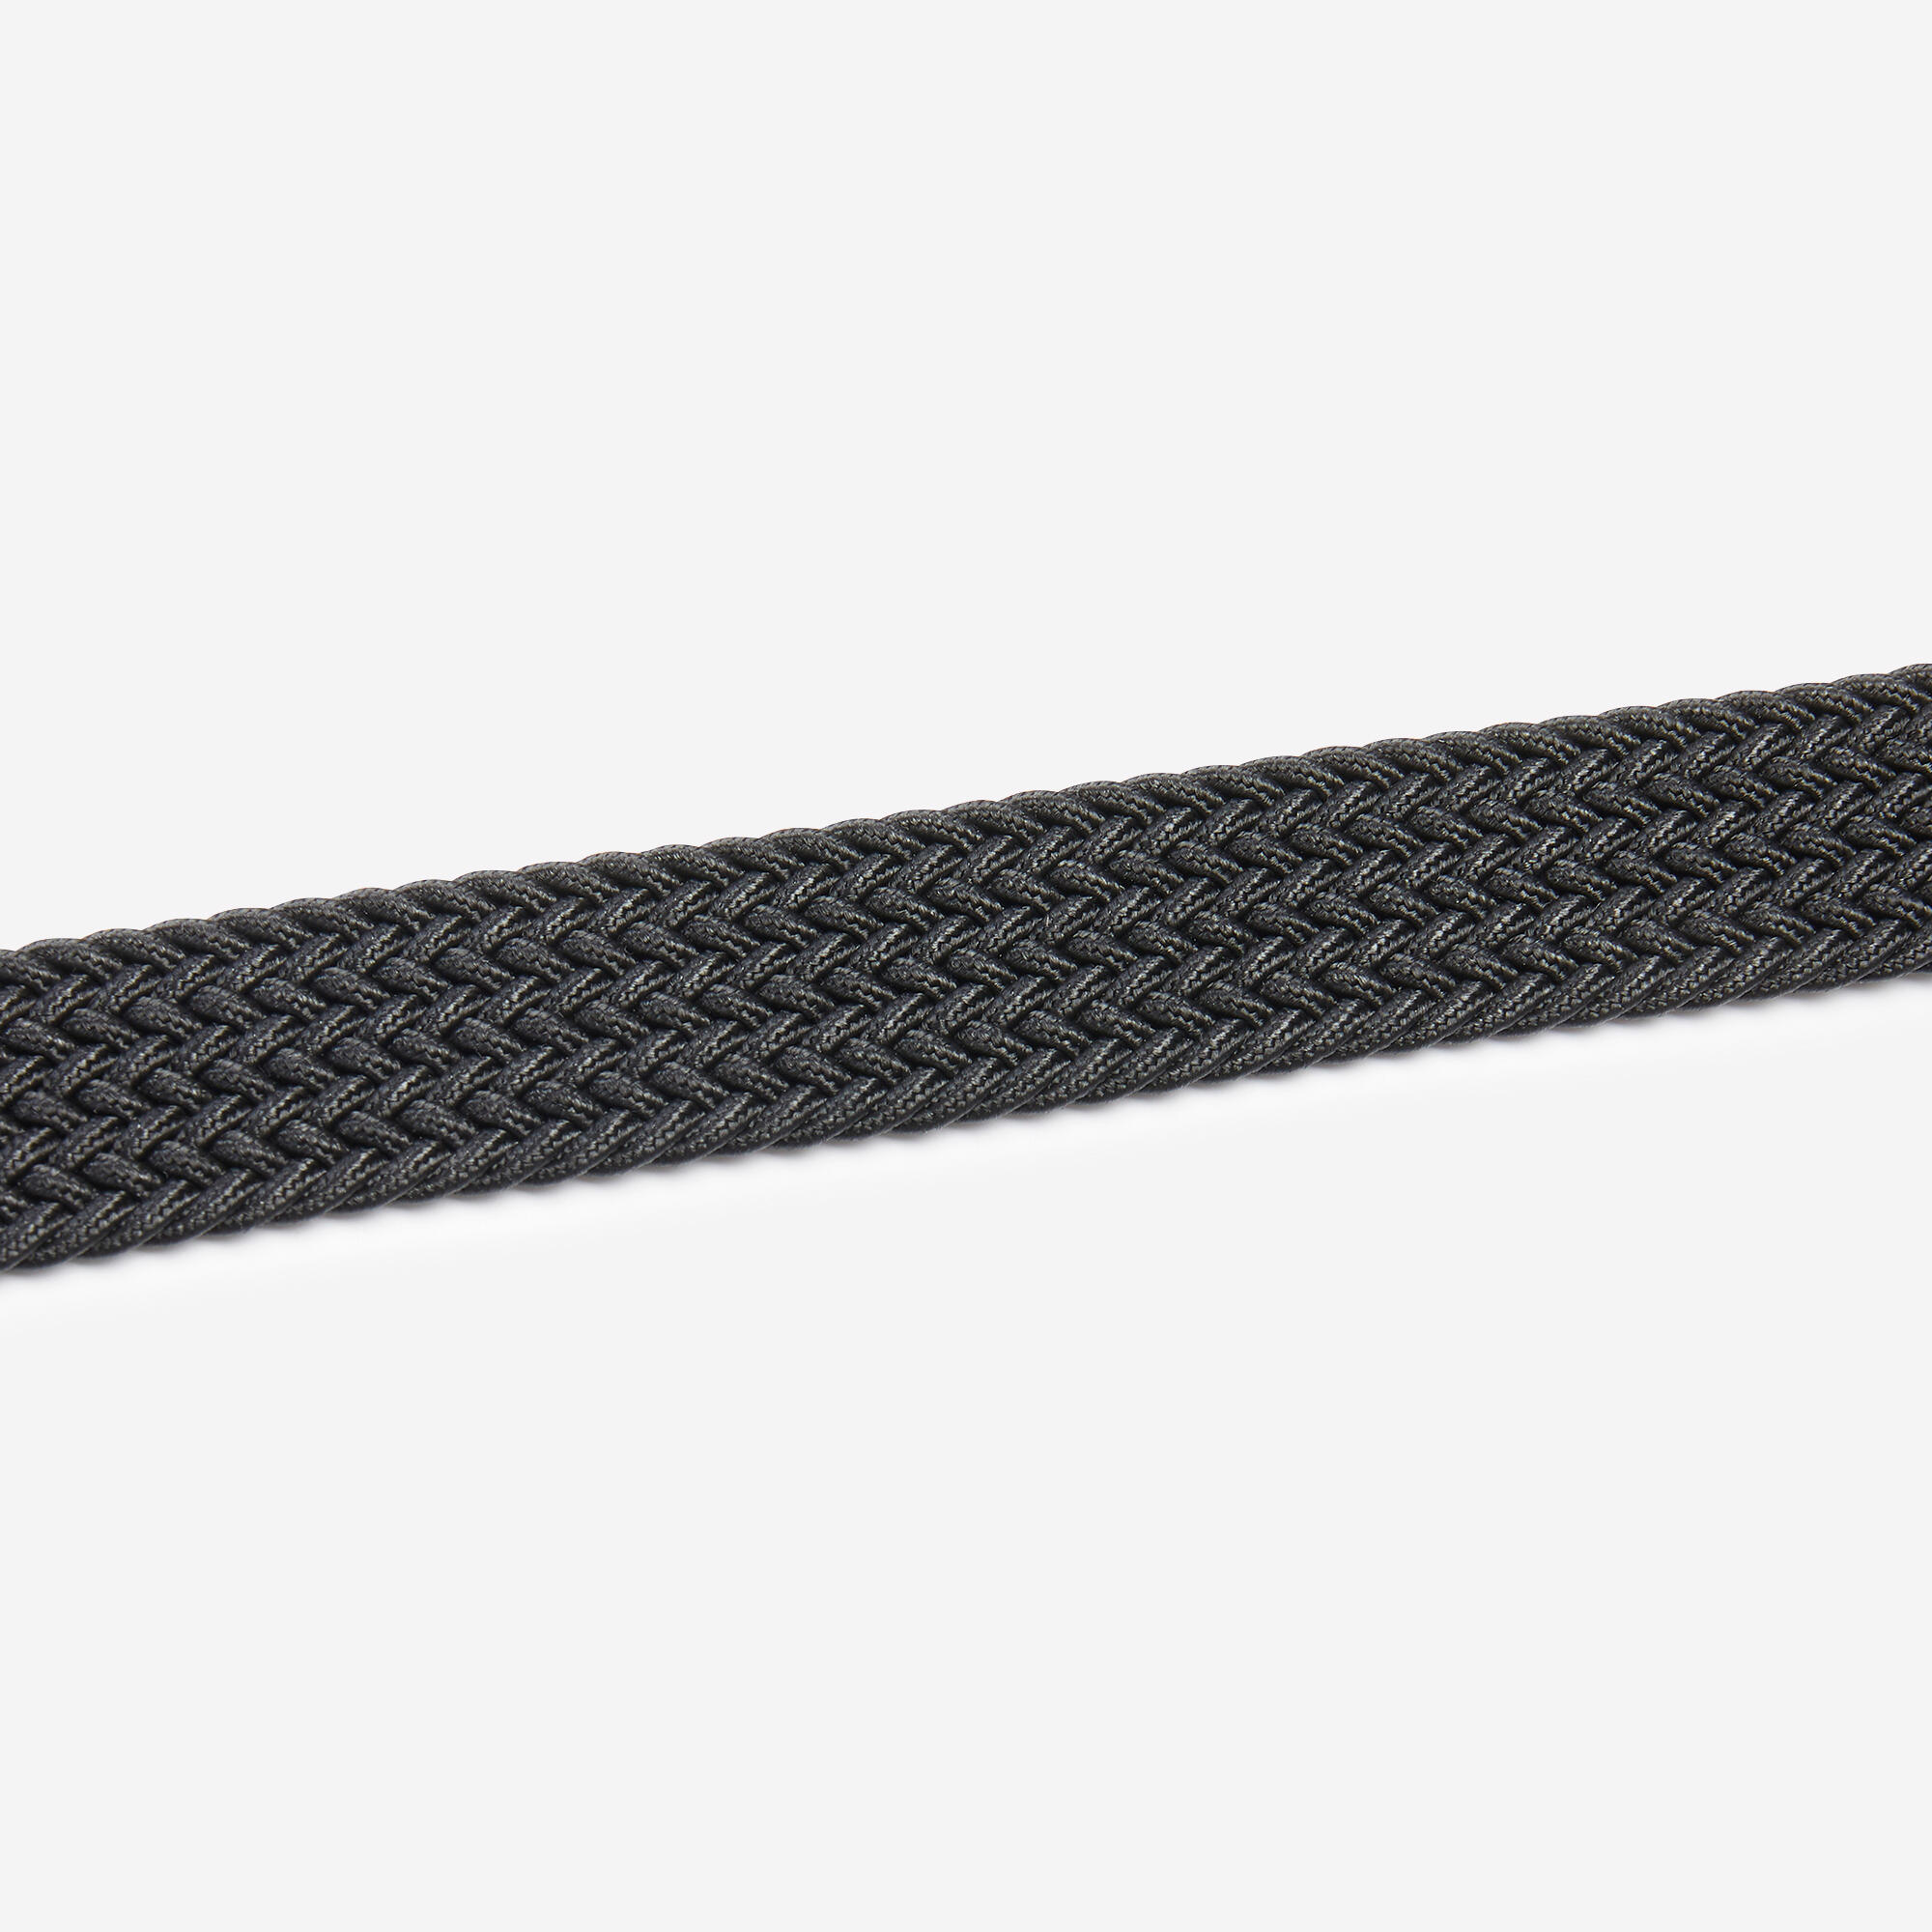 Men’s Stretchy Braided Golf Belt - Black